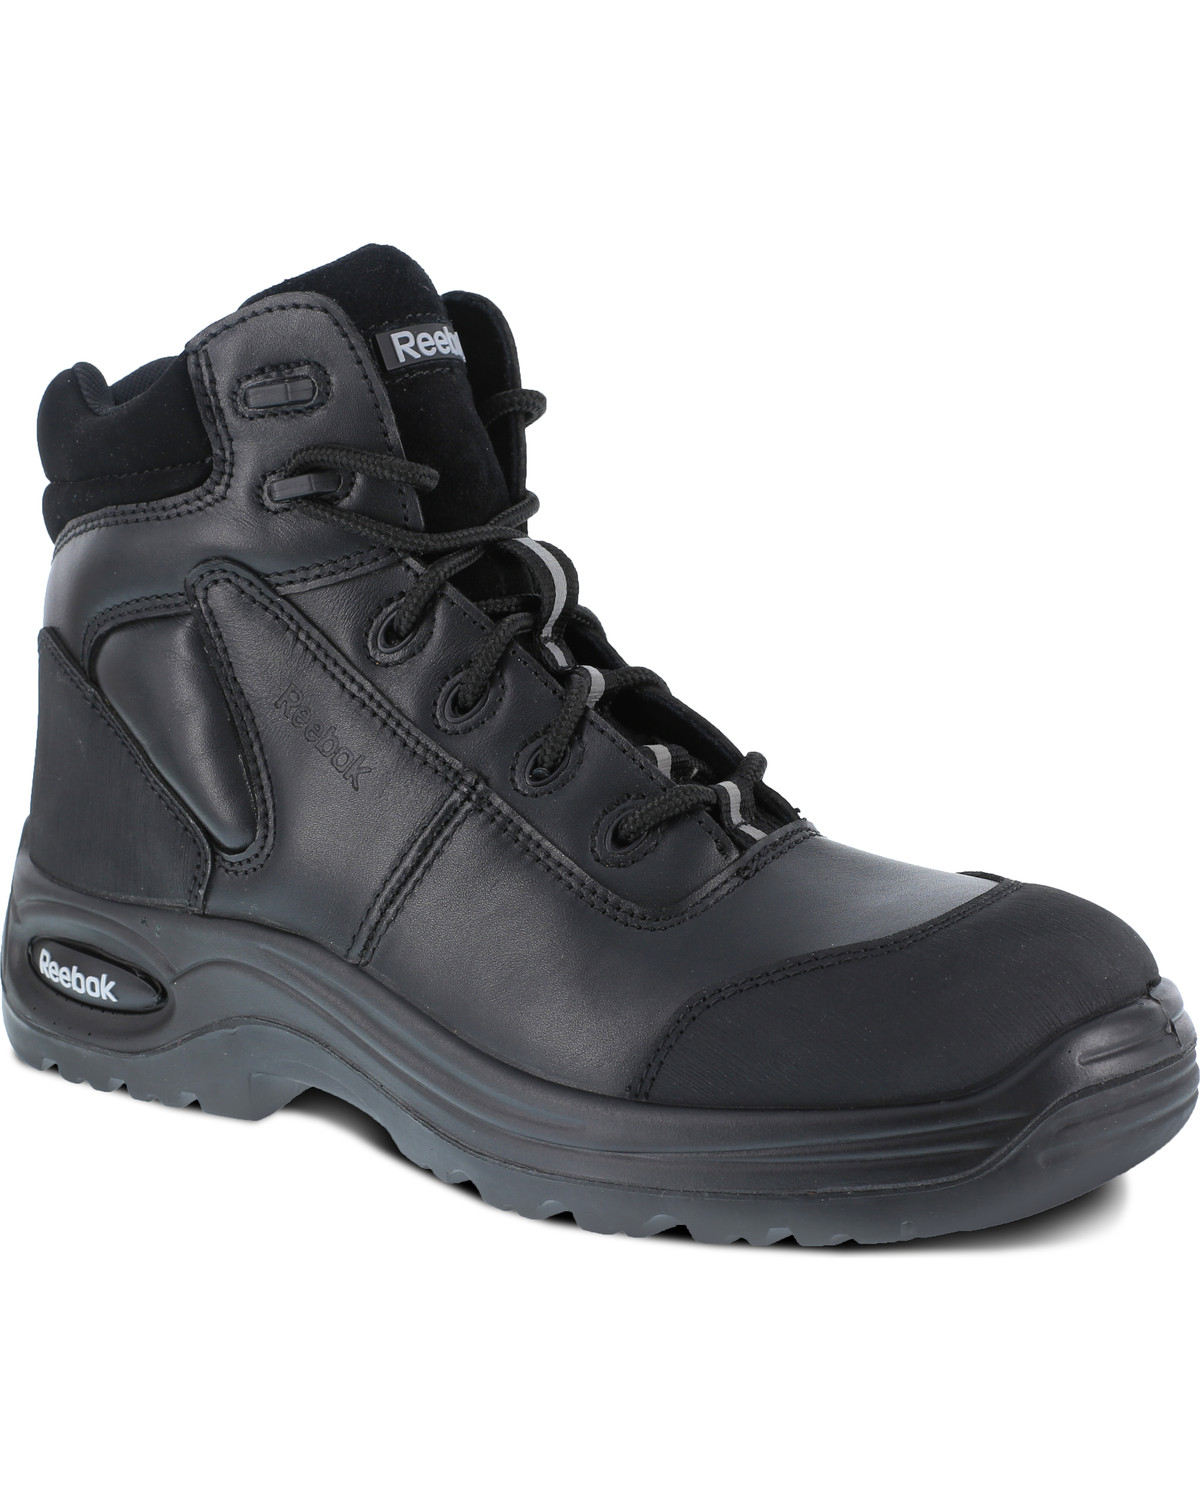 Reebok Men's Trainex 6" Lace-Up Work Boots - Composite Toe